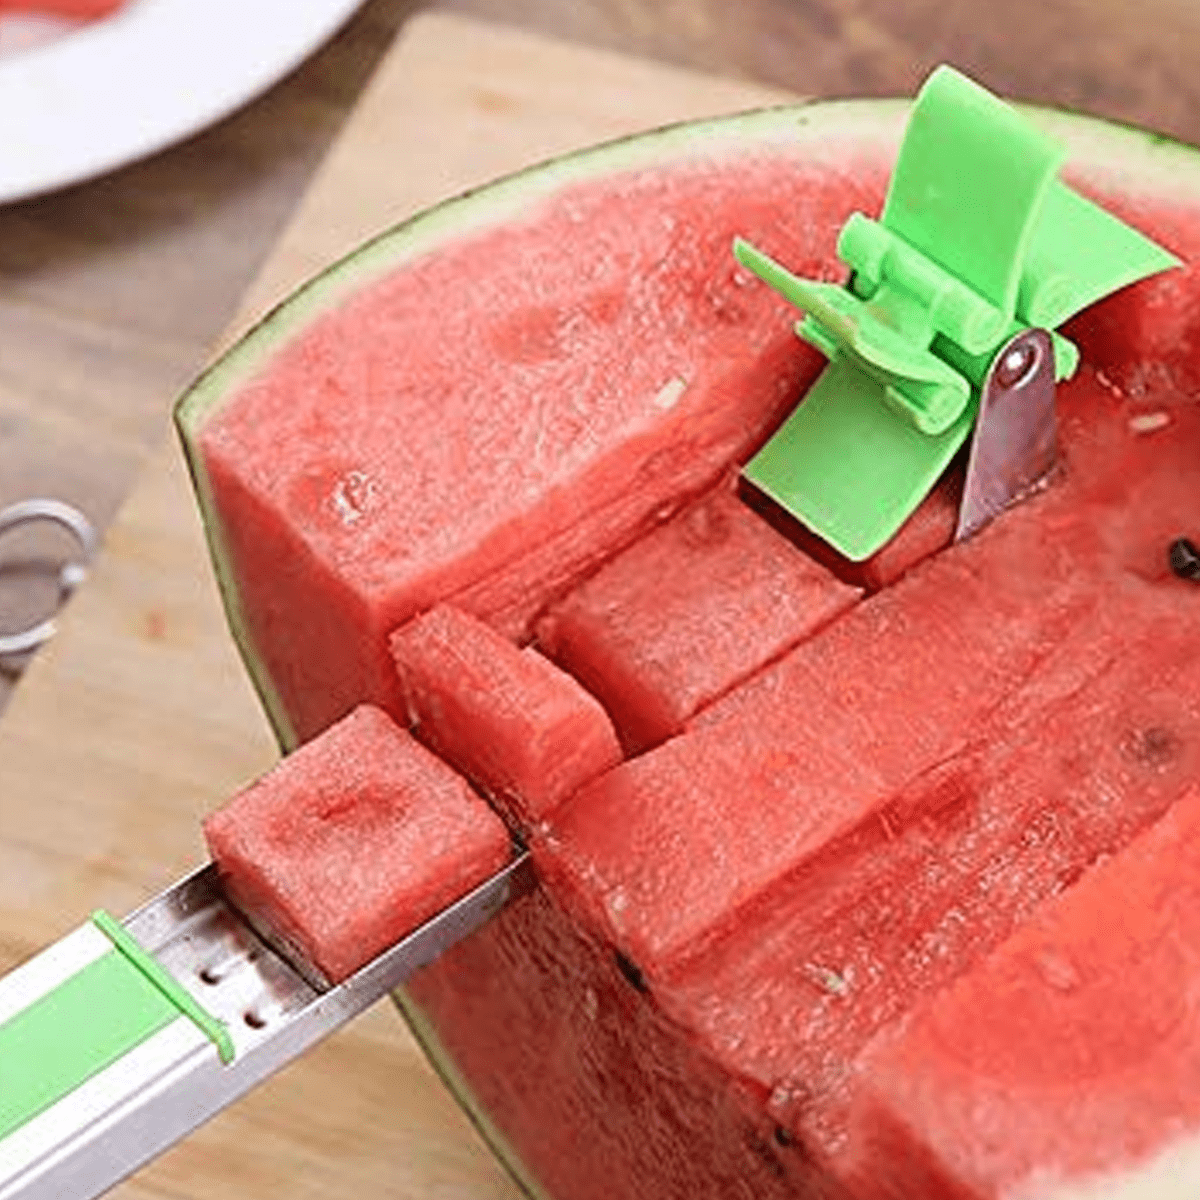 Windmill Shape Watermelon Cutter